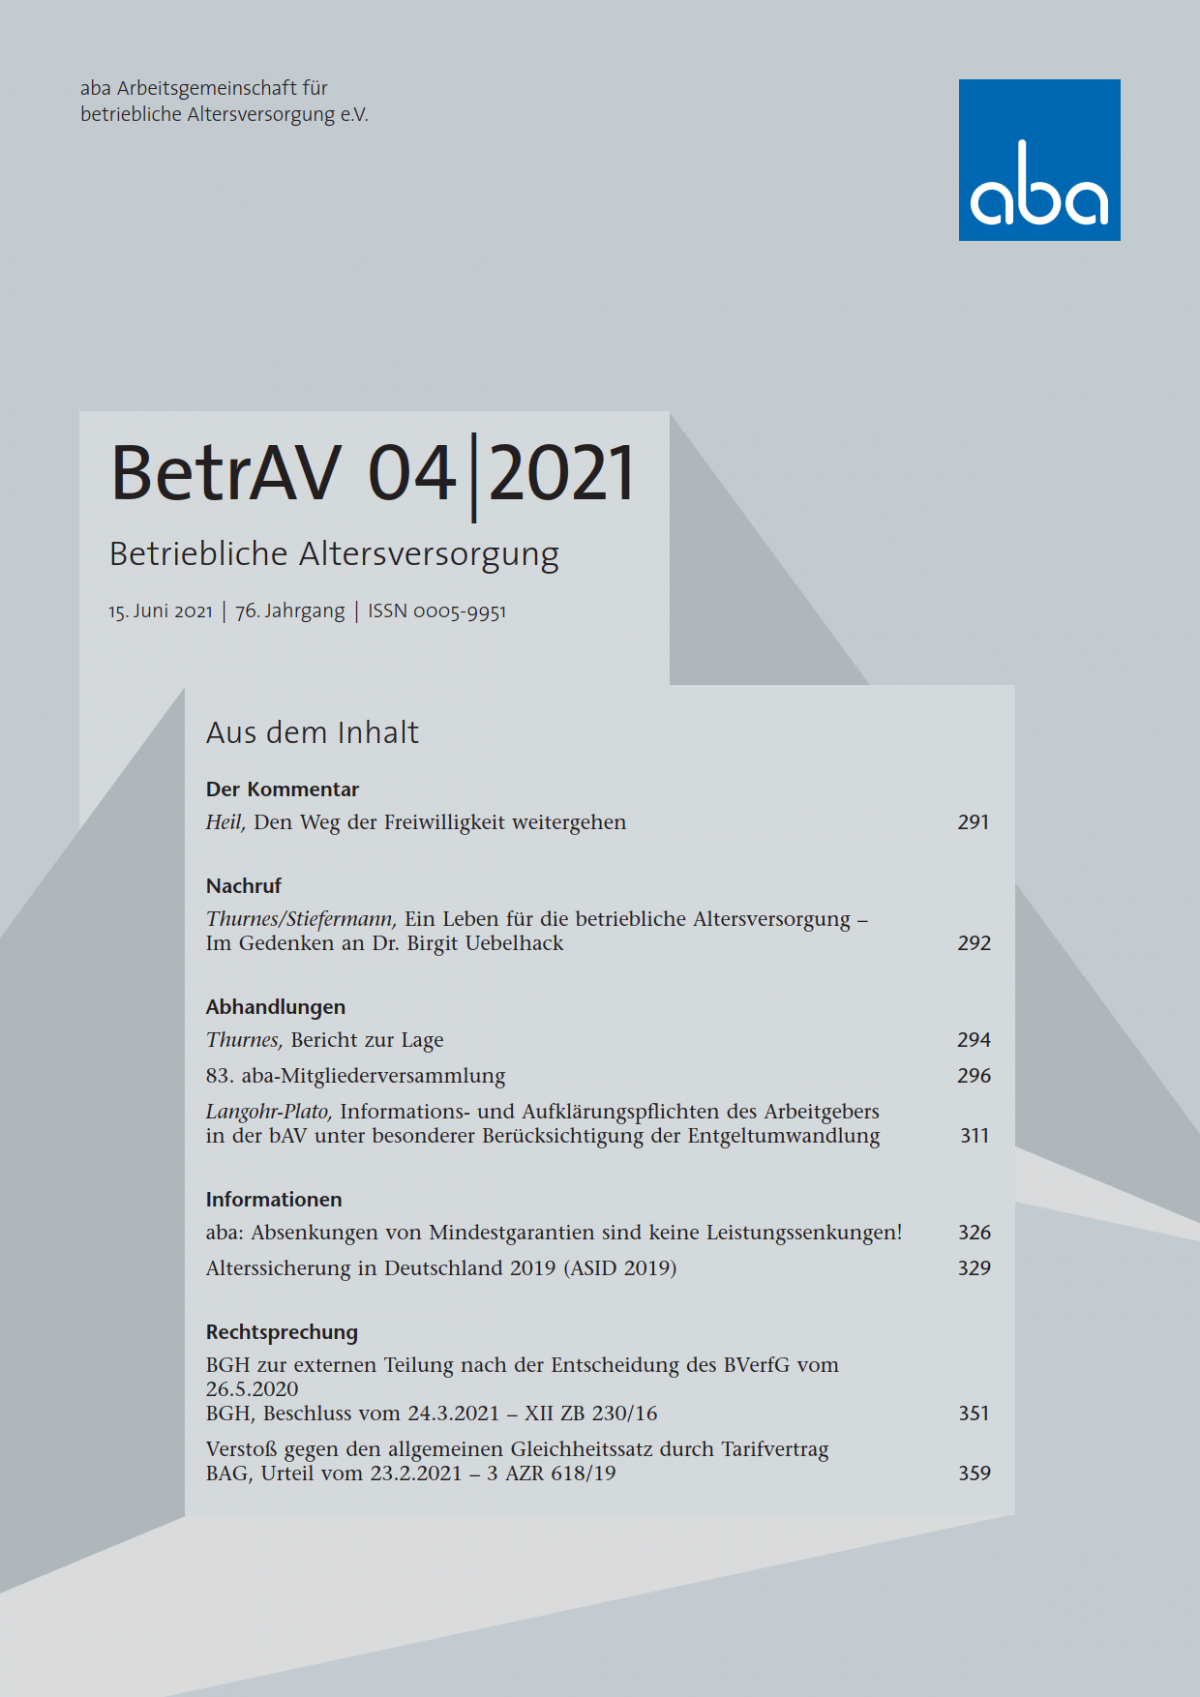 BetrAV-Ausgabe 4/2021 erschienen